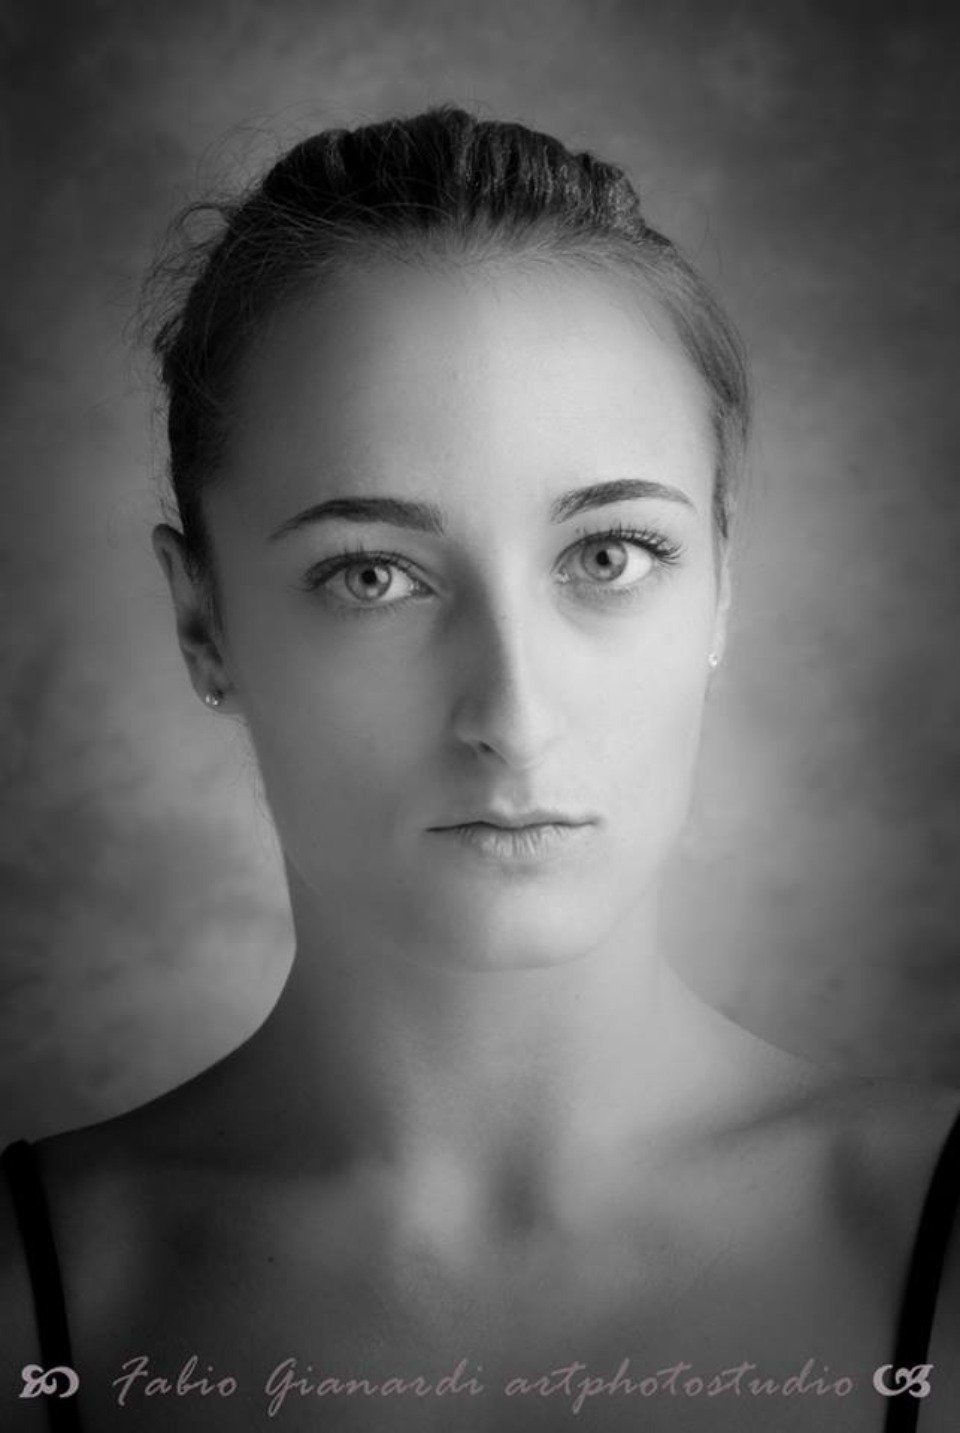 Lara Pilloni qualified ballet dancer